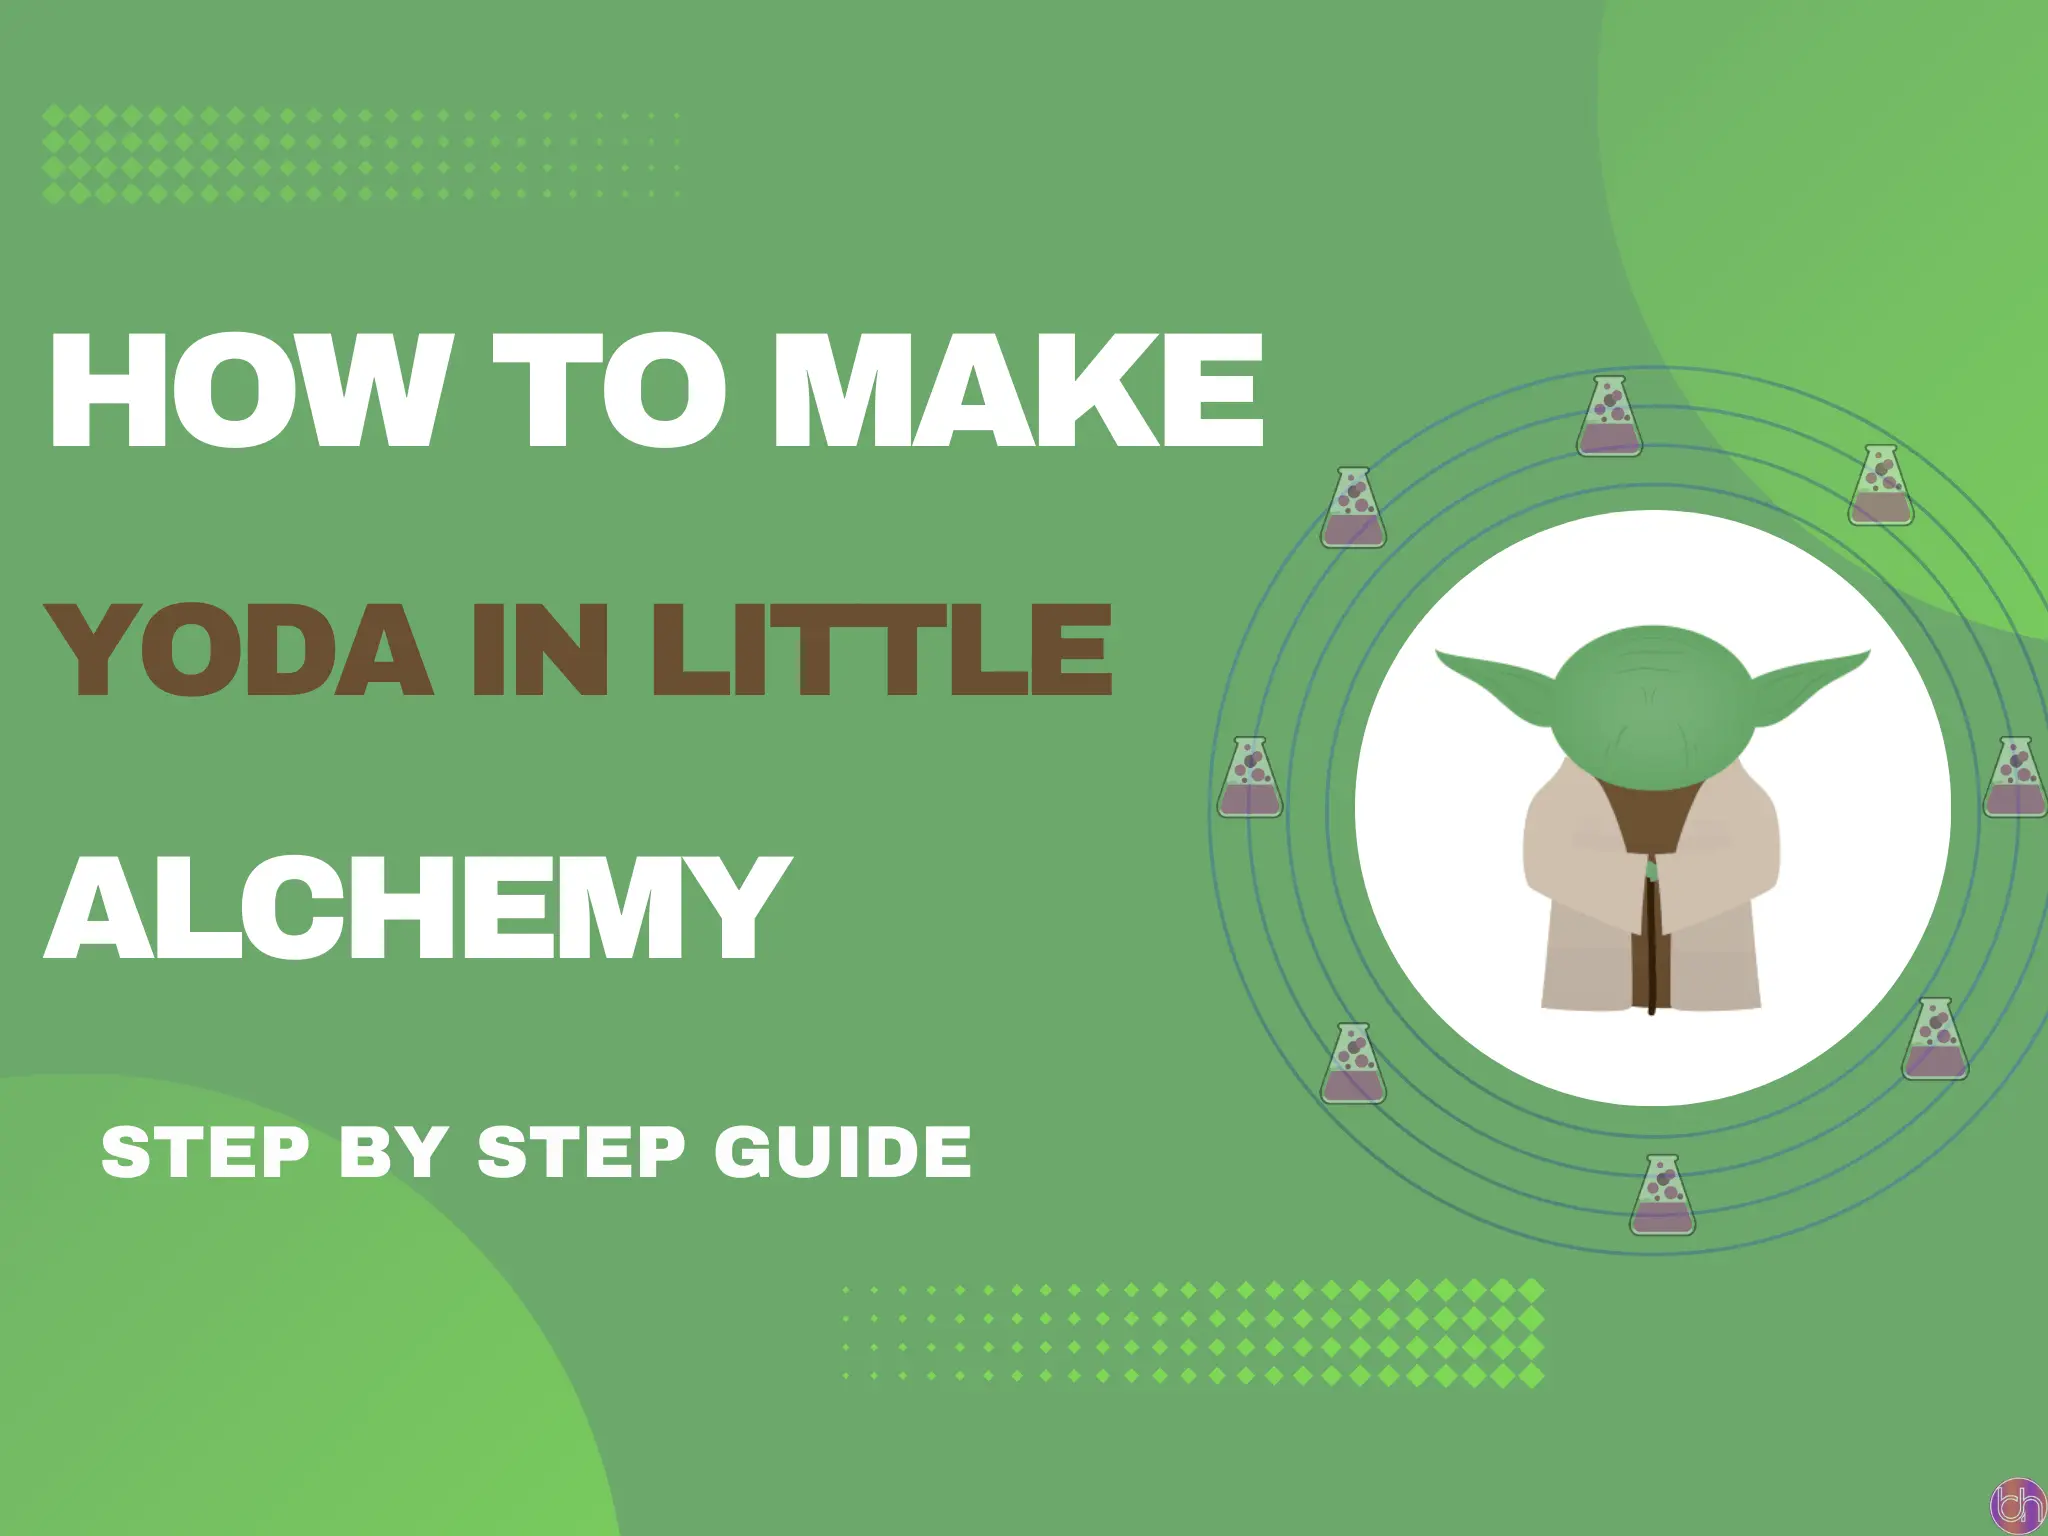 How to make Yoda in little alchemy